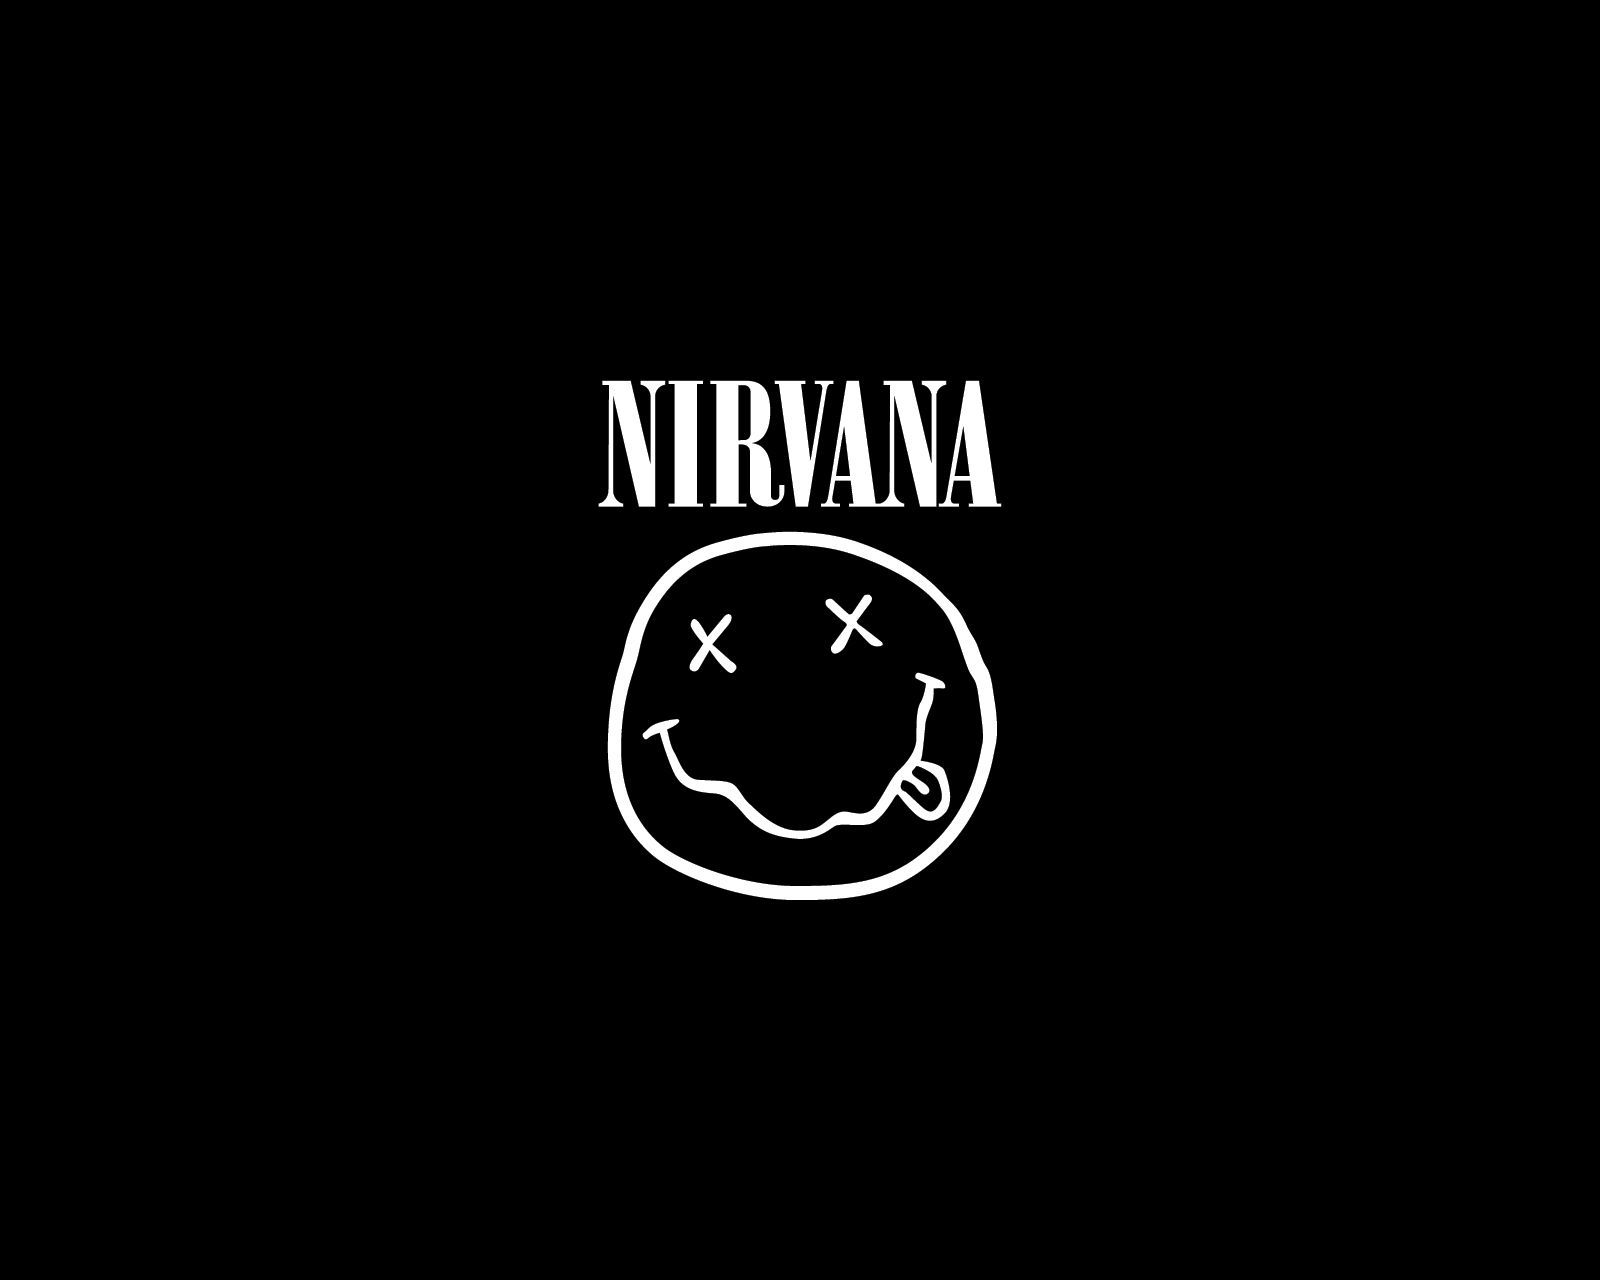 Nirvana logo. Nirvana wallpaper, Nirvana, Nirvana logo